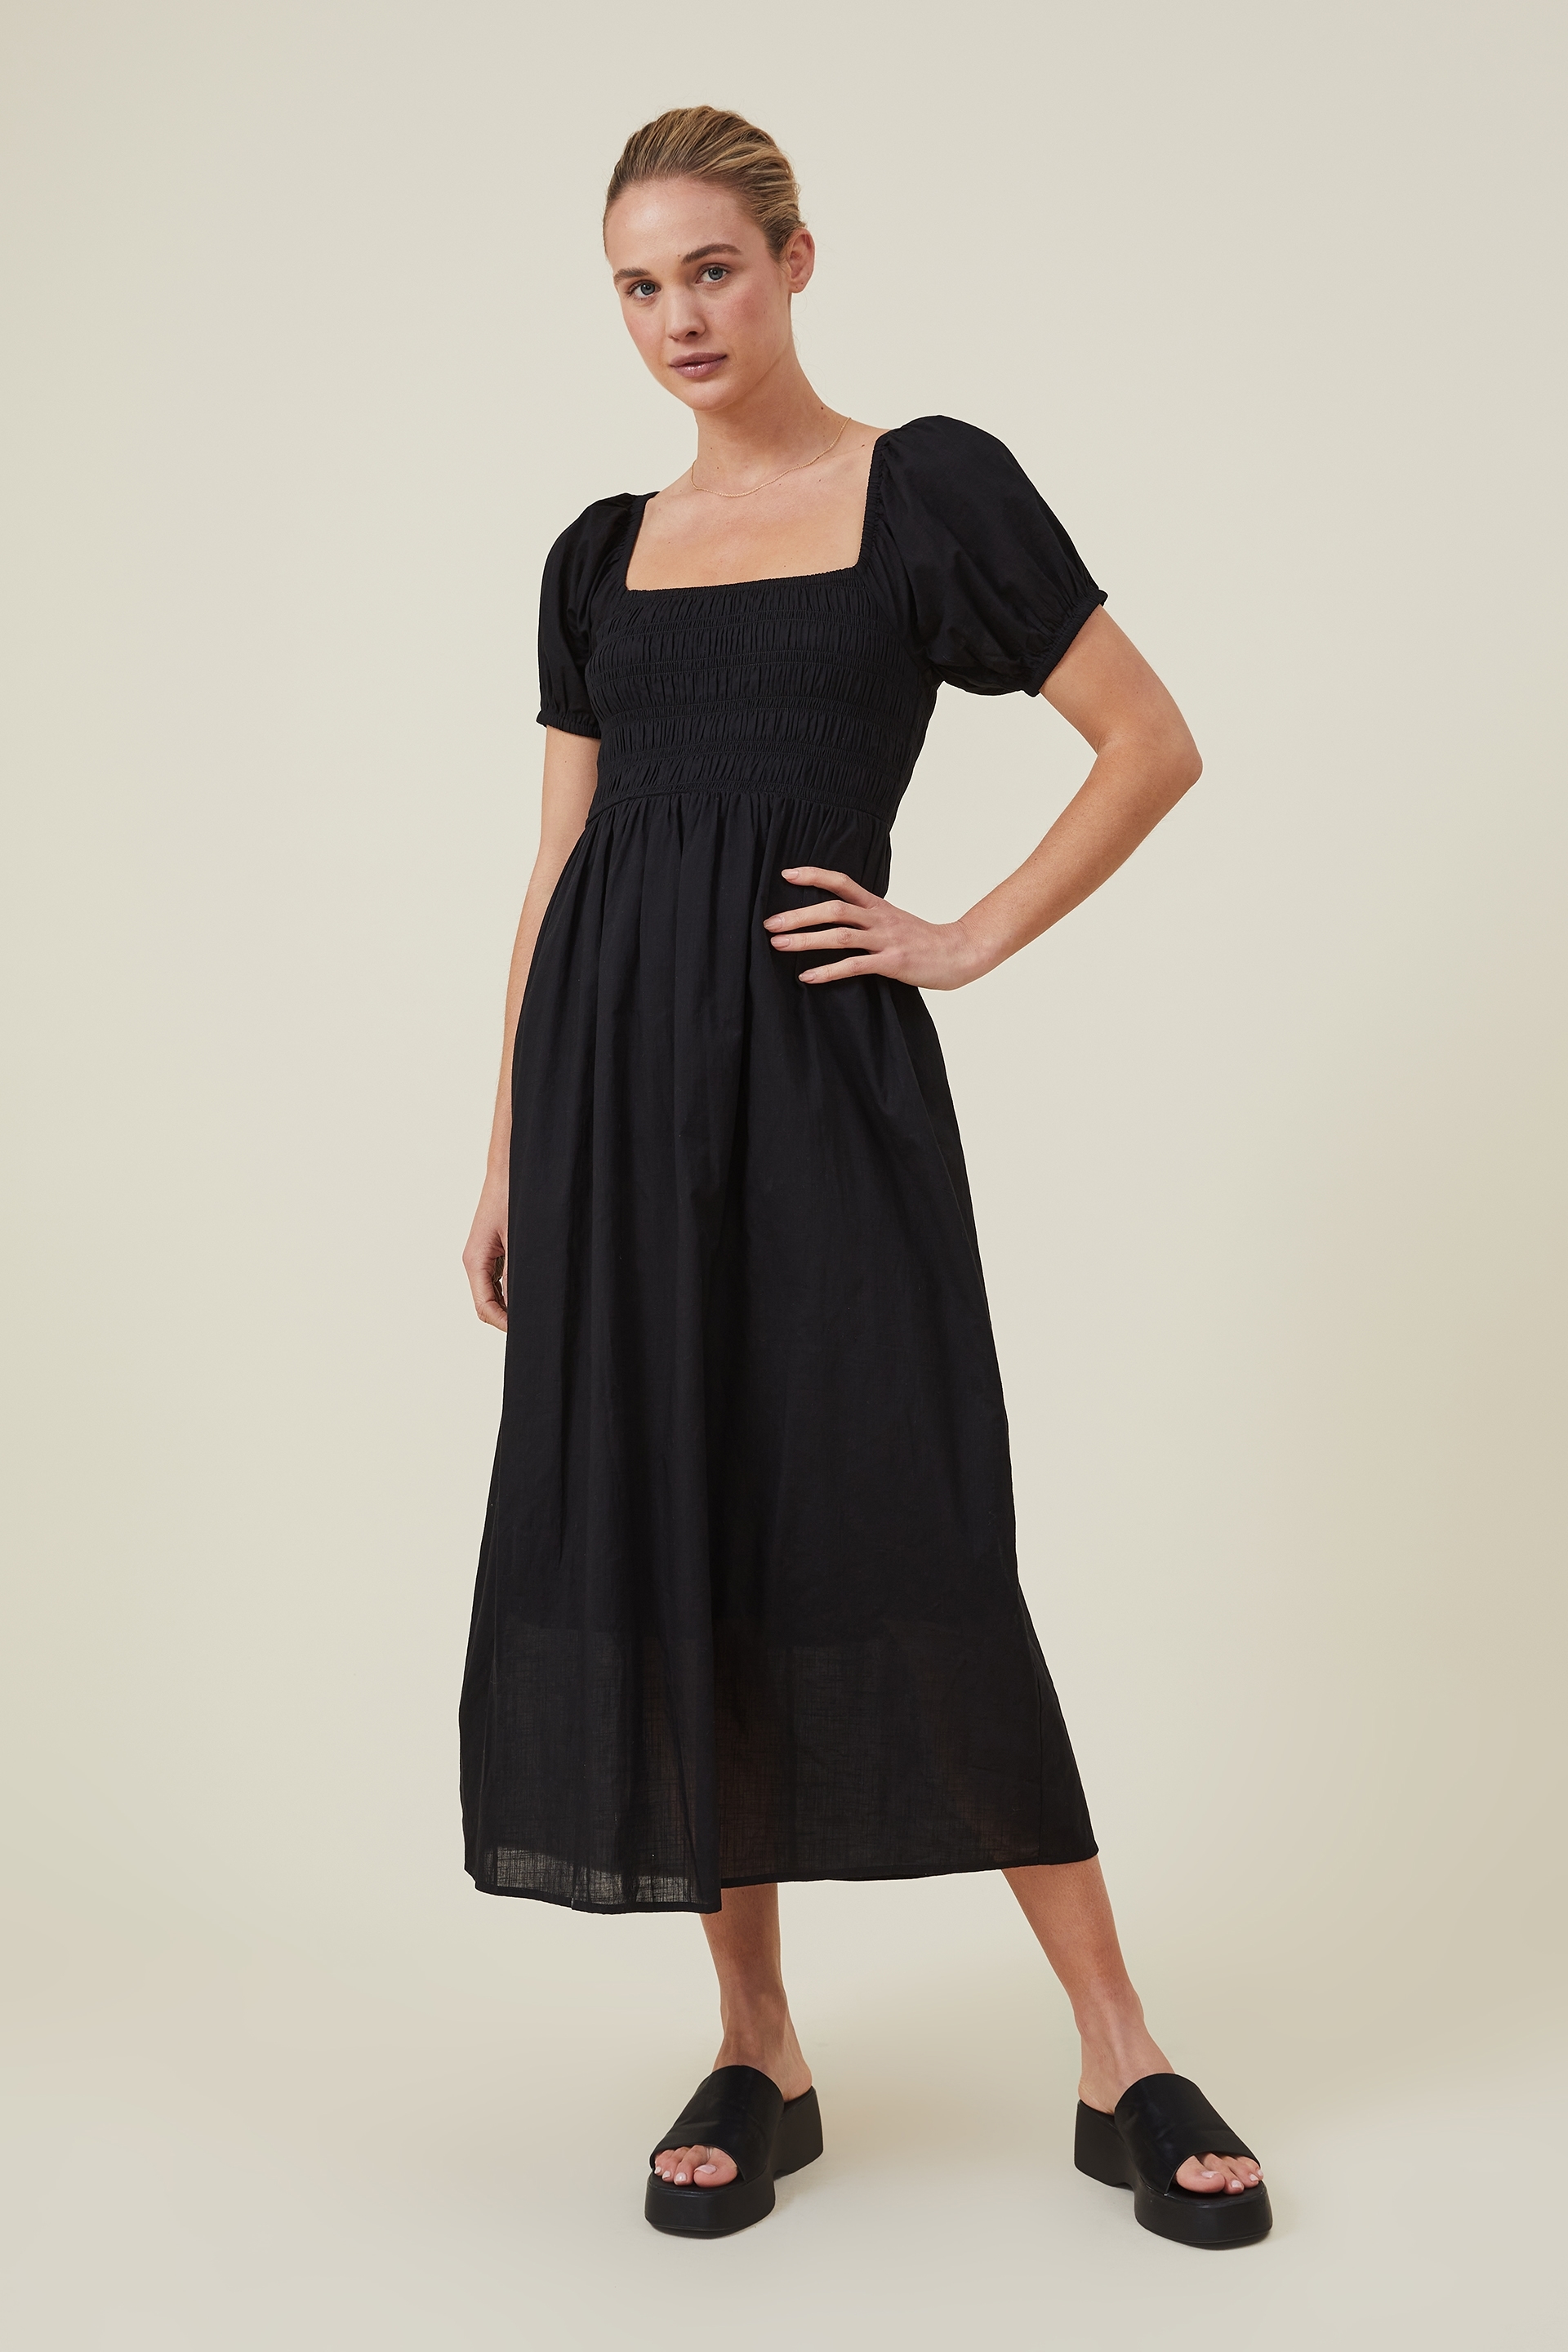 Cotton On Women - Adrianna Shirred Maxi Dress - Black